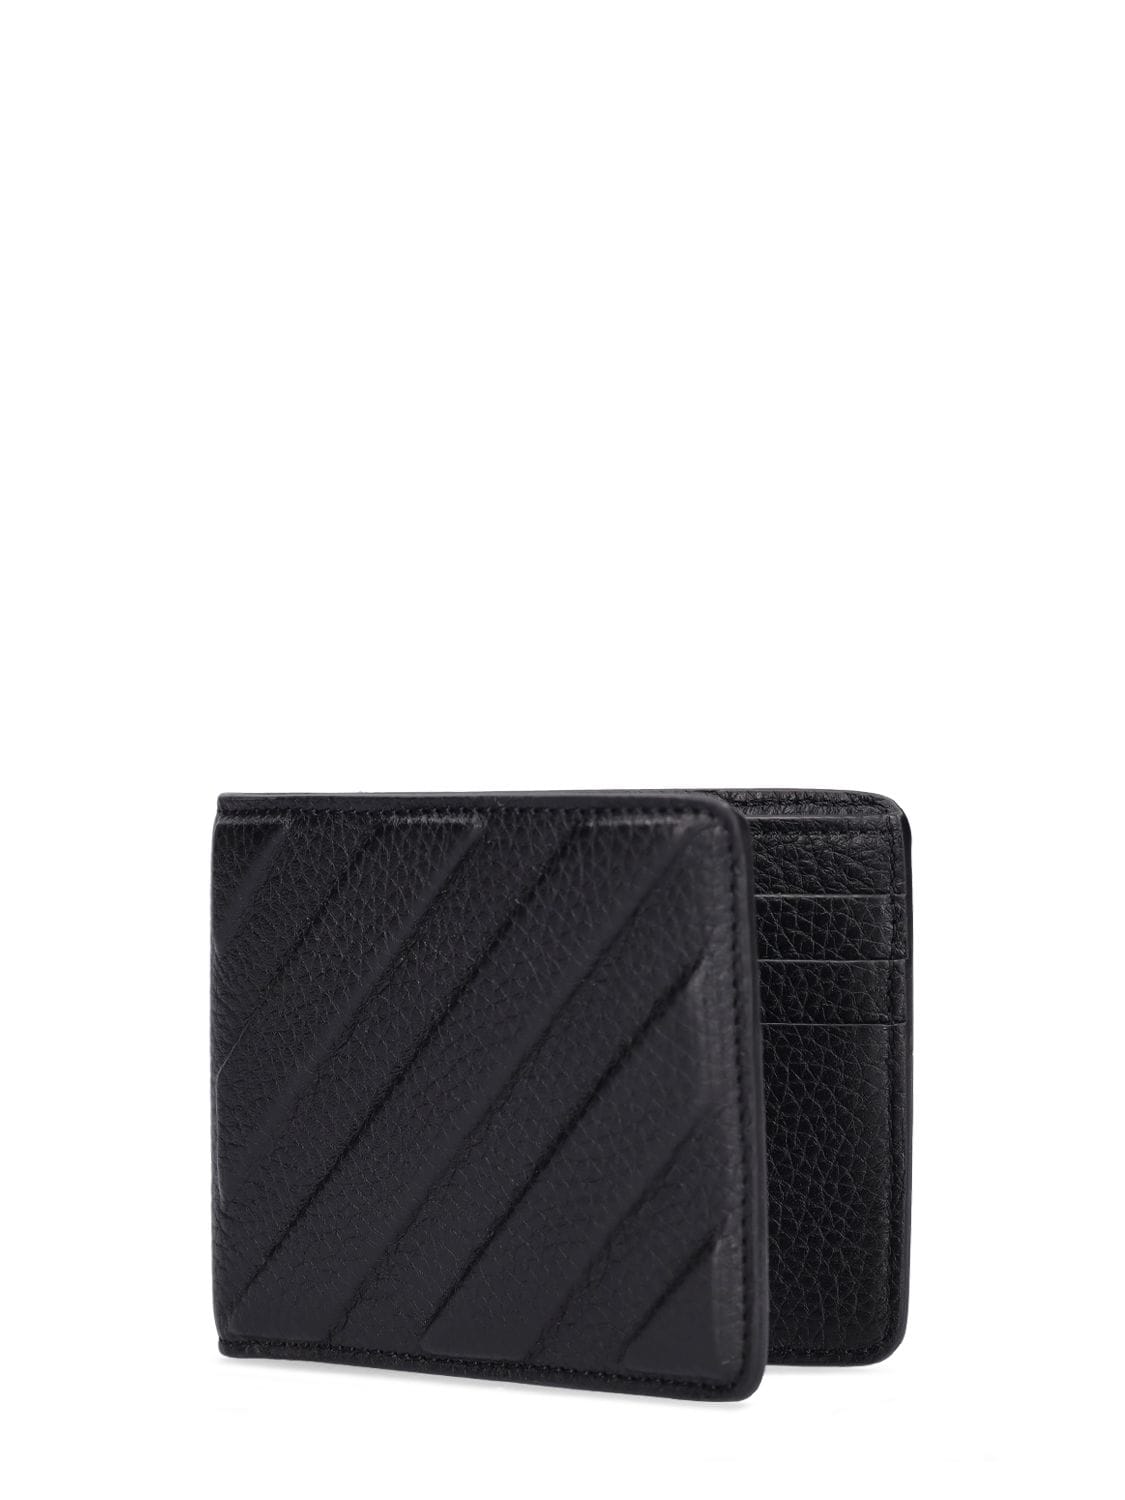 Off-White Diag Zipped Card Case Black